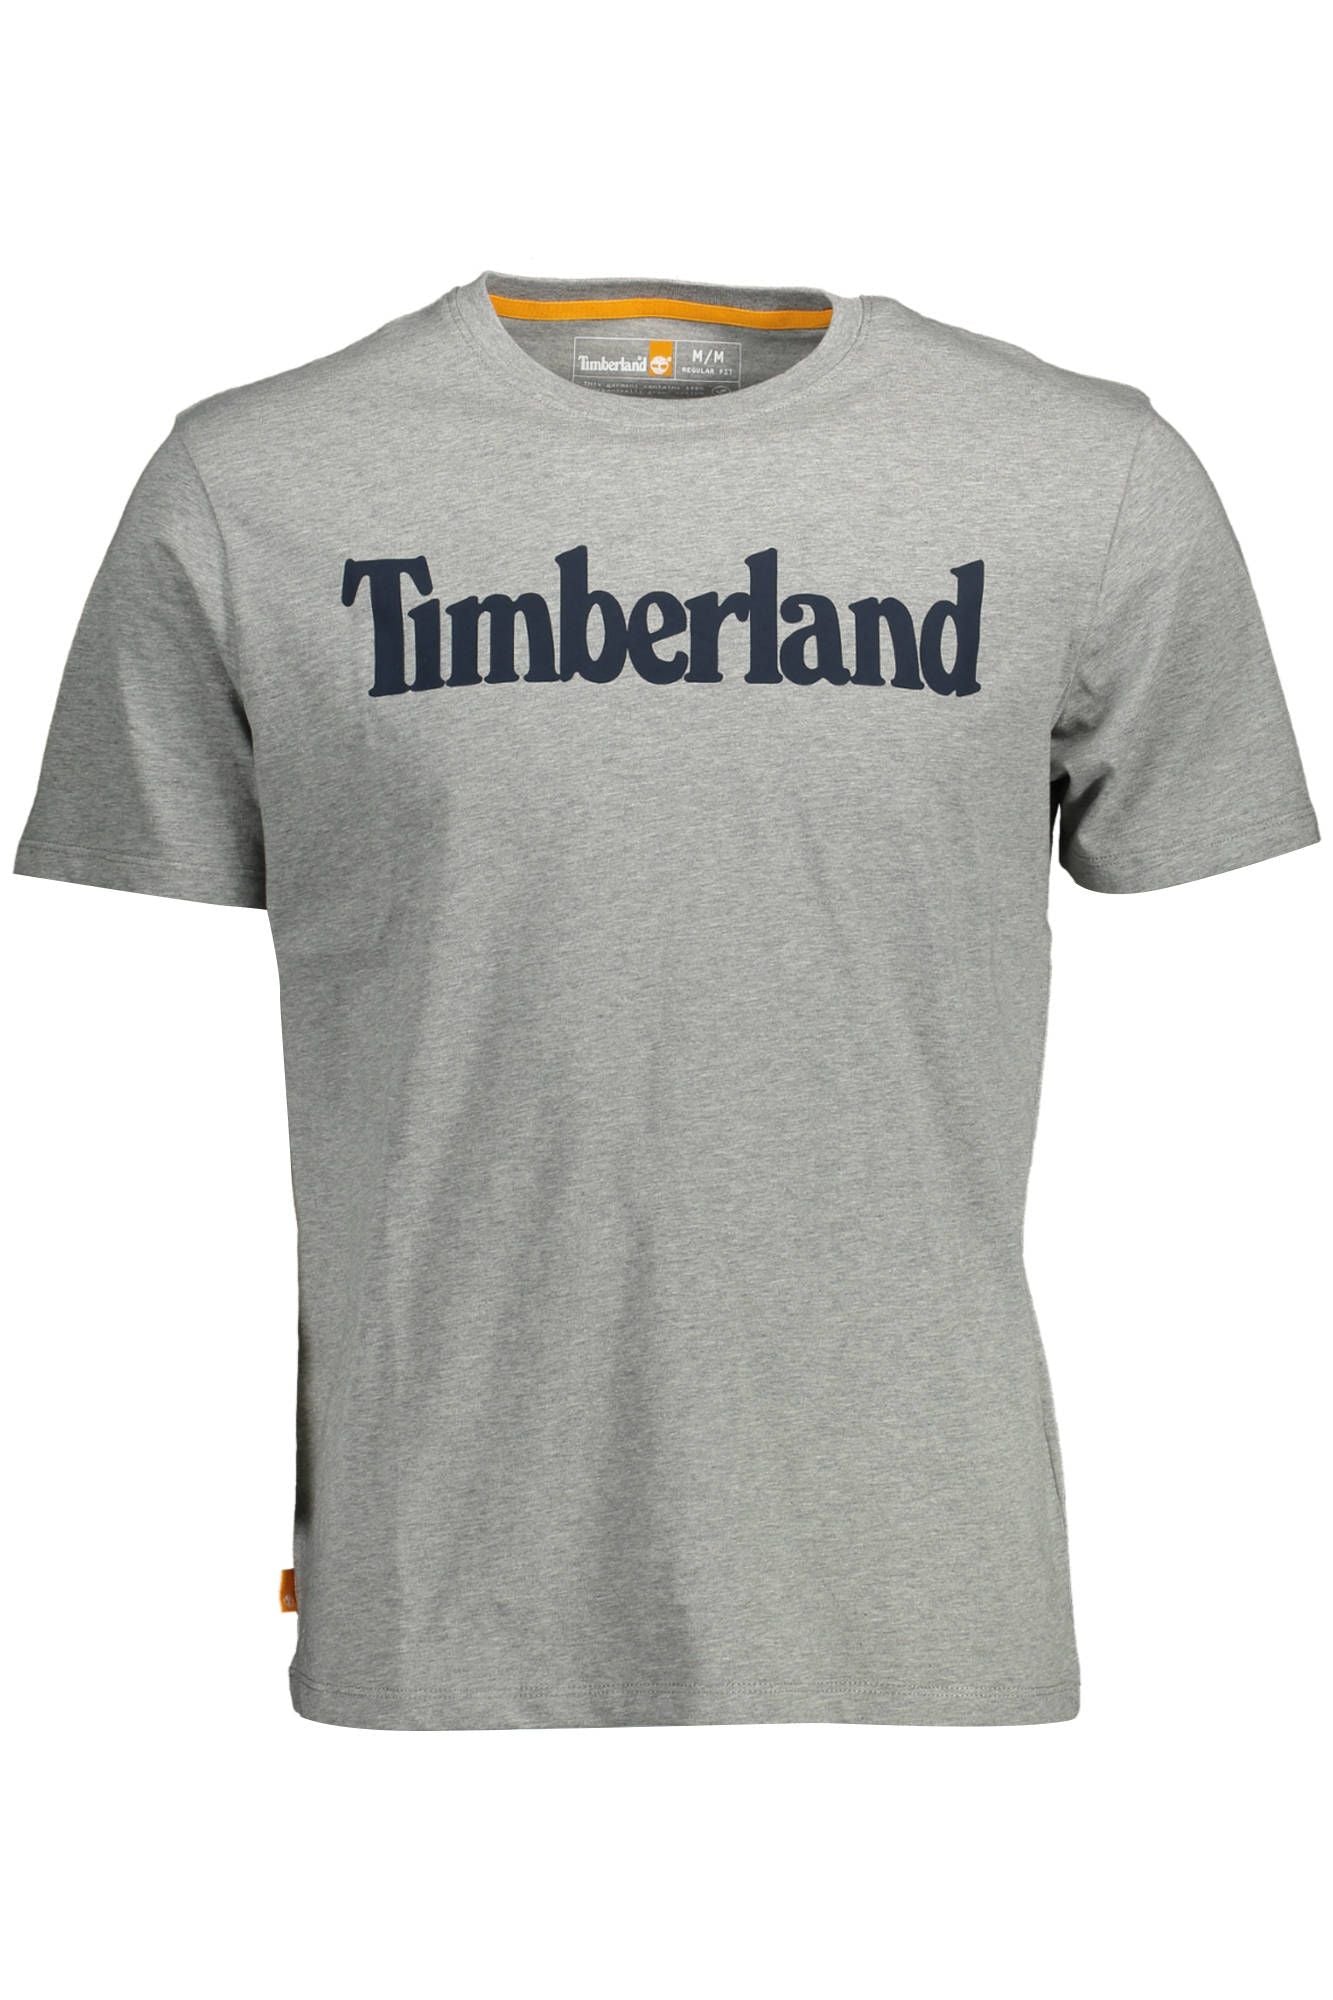 Timberland Eco-Conscious Gray Cotton Tee with Logo Print